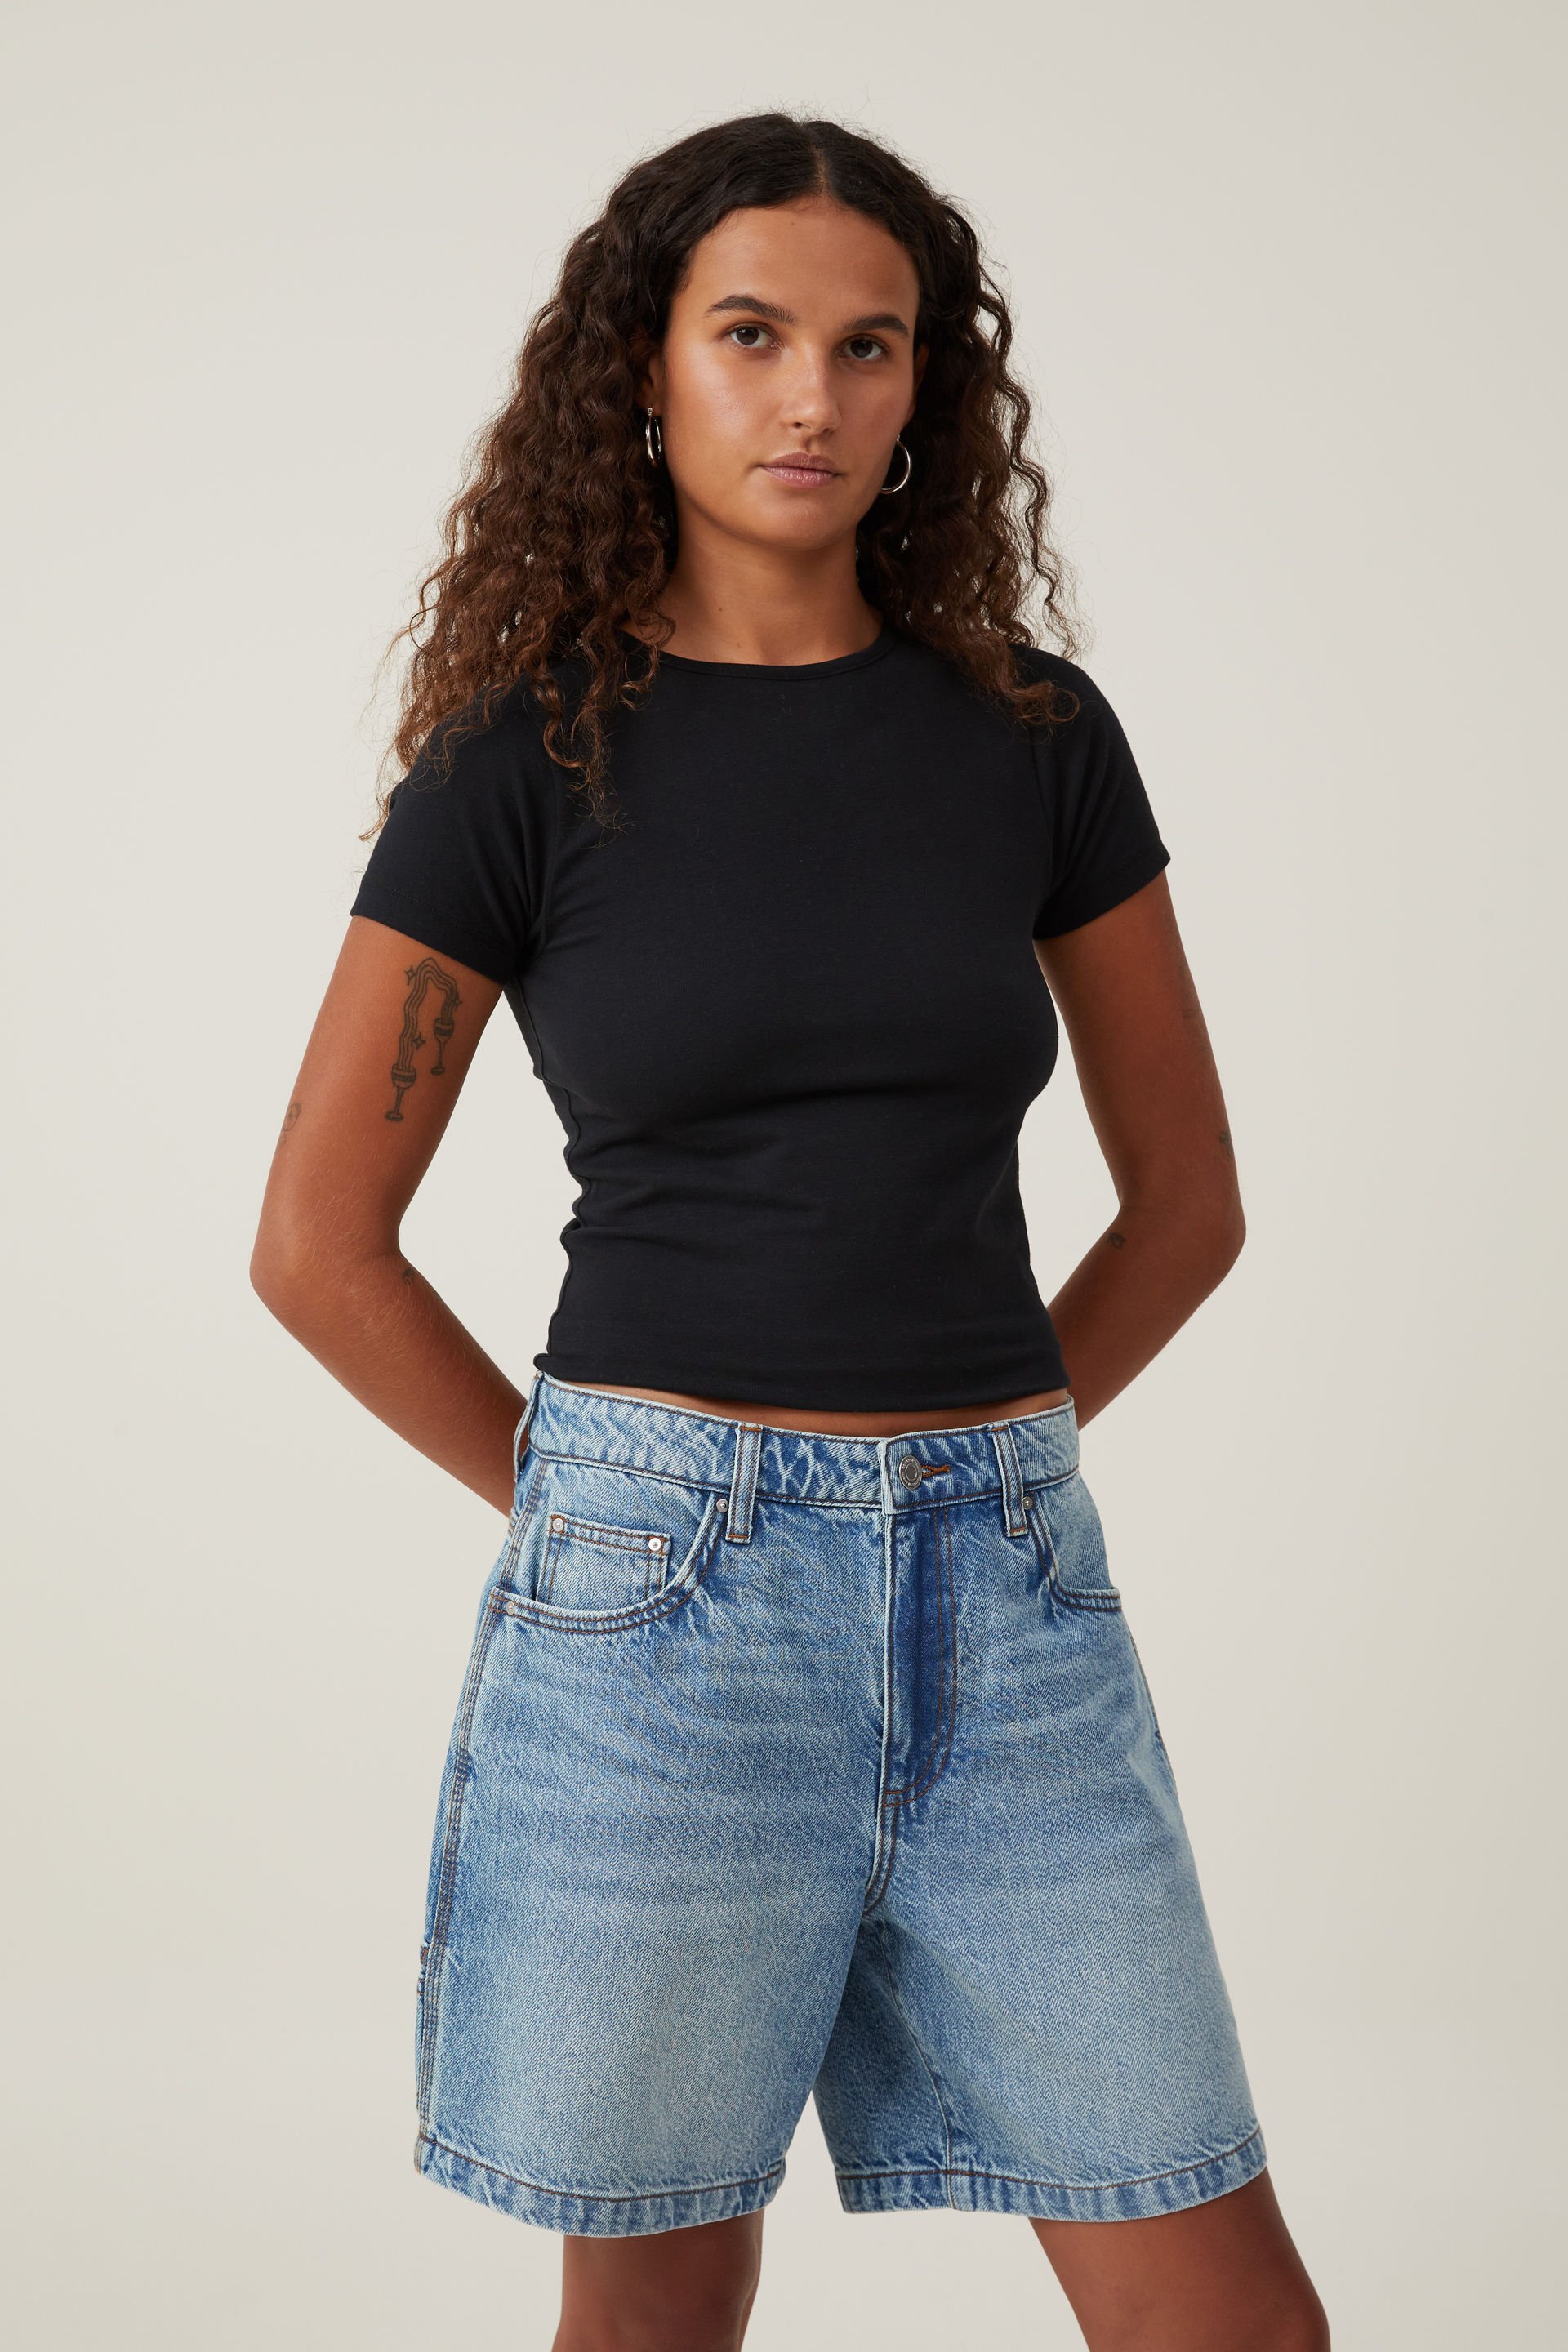 RedLuv Girl's Cotton Shorts| Short Pants | Hot Pants | Regular Fit | Girls  Shorts